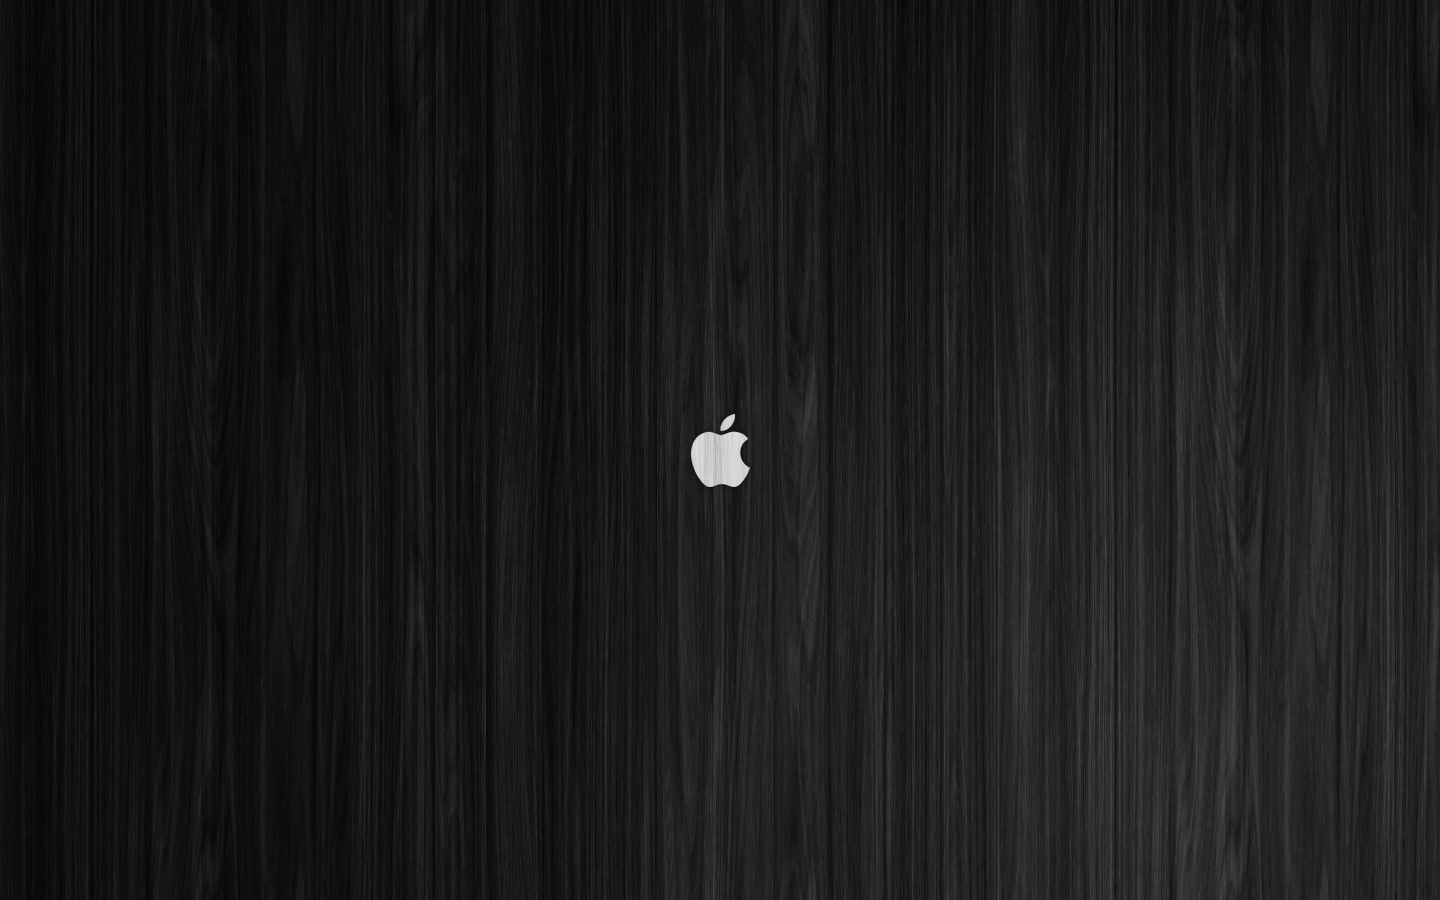 White Apple on Black Wood Mac Wallpaper by ZGraphx on DeviantArt